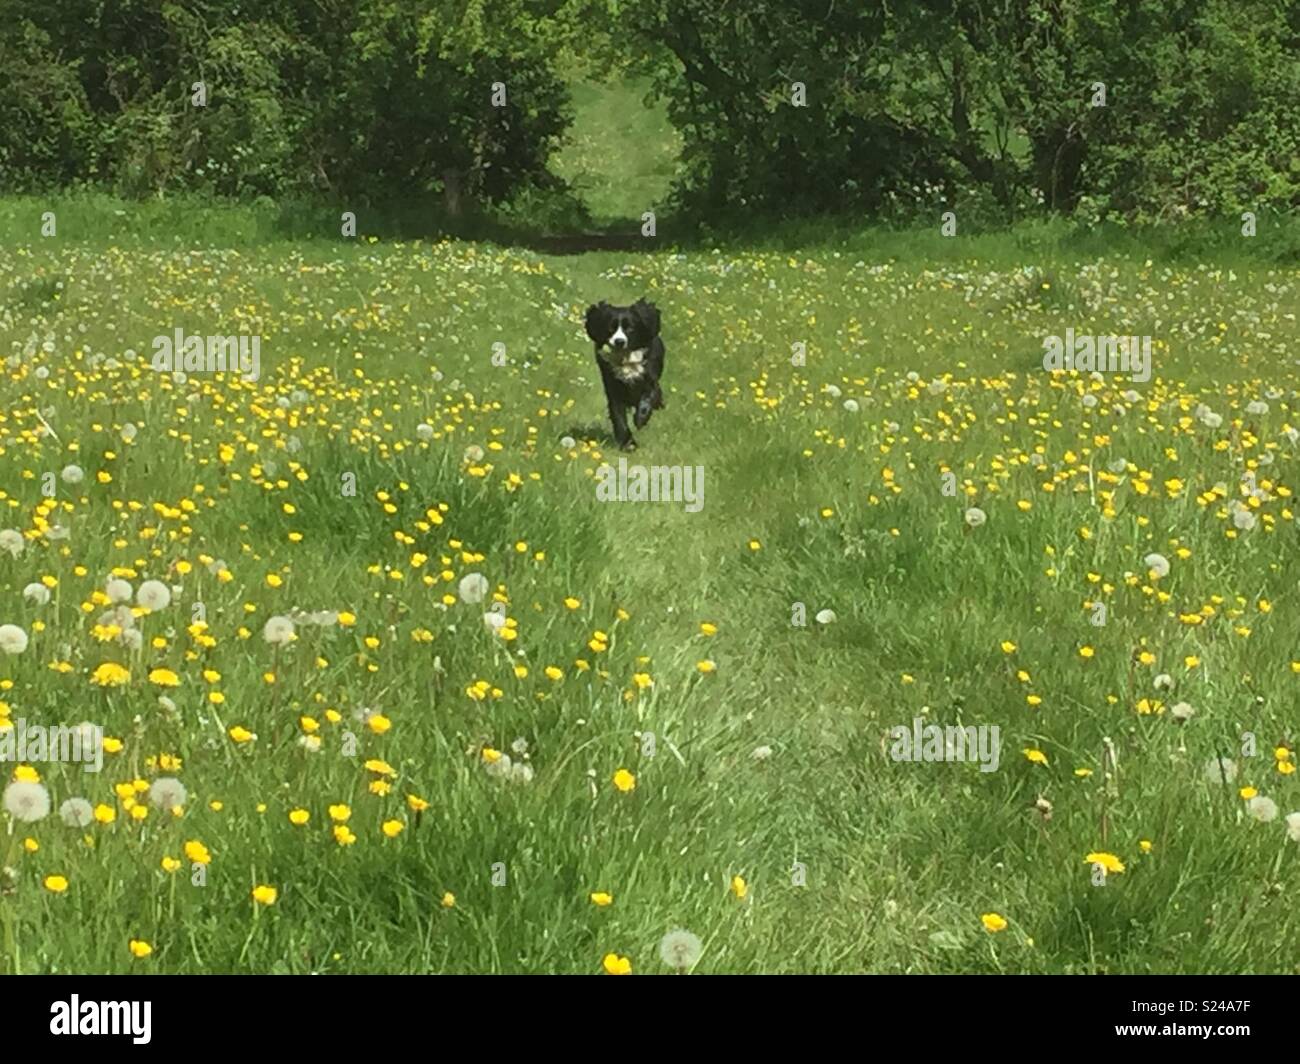 Dog running through a field Stock Photo